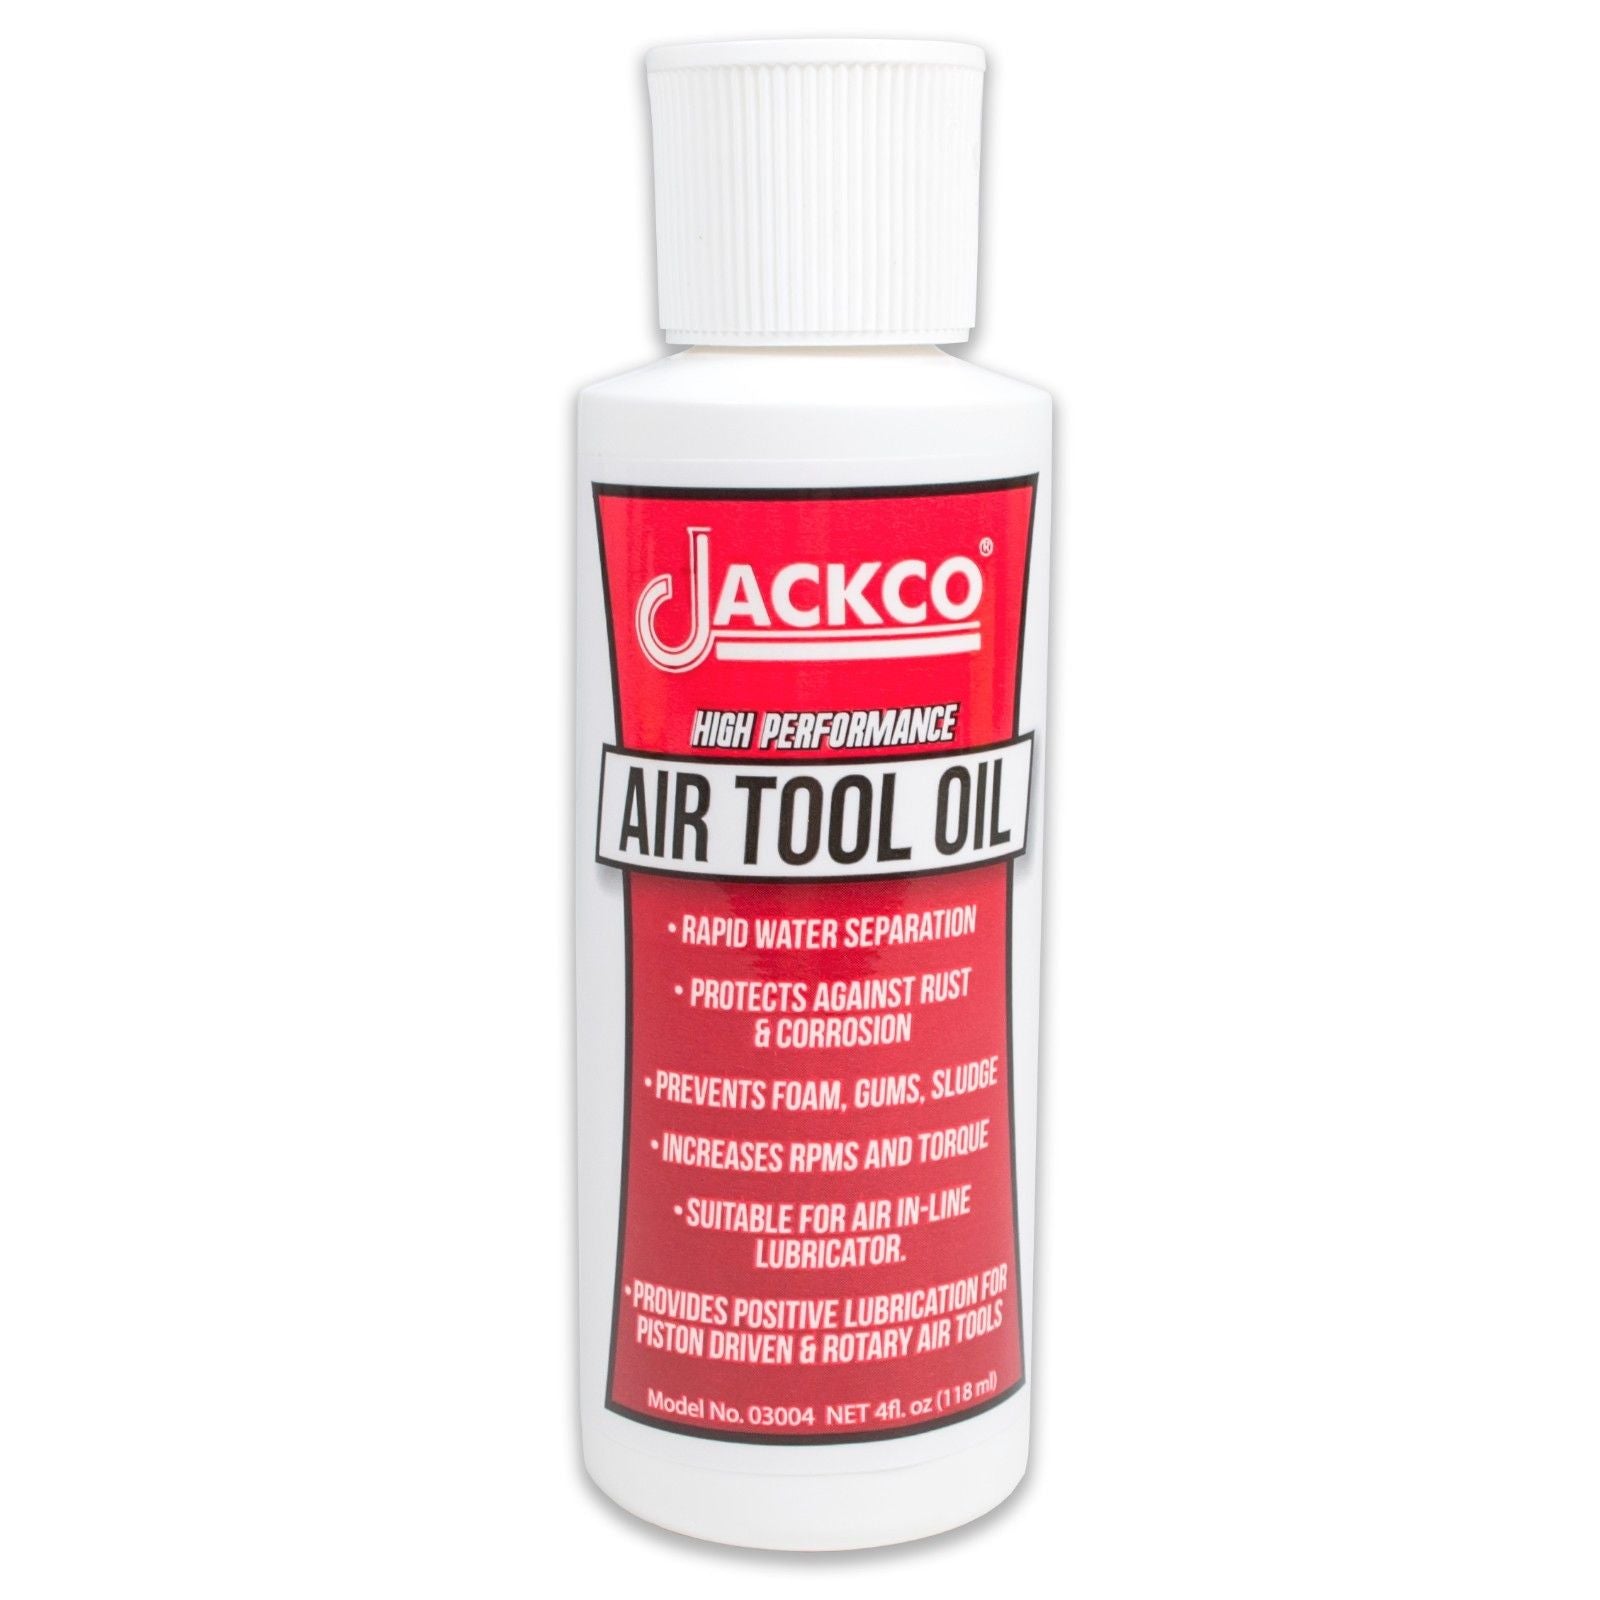 Jackco High Performance Pneumatic Air Tool Oil (4 oz.) - Tool Guy Republic